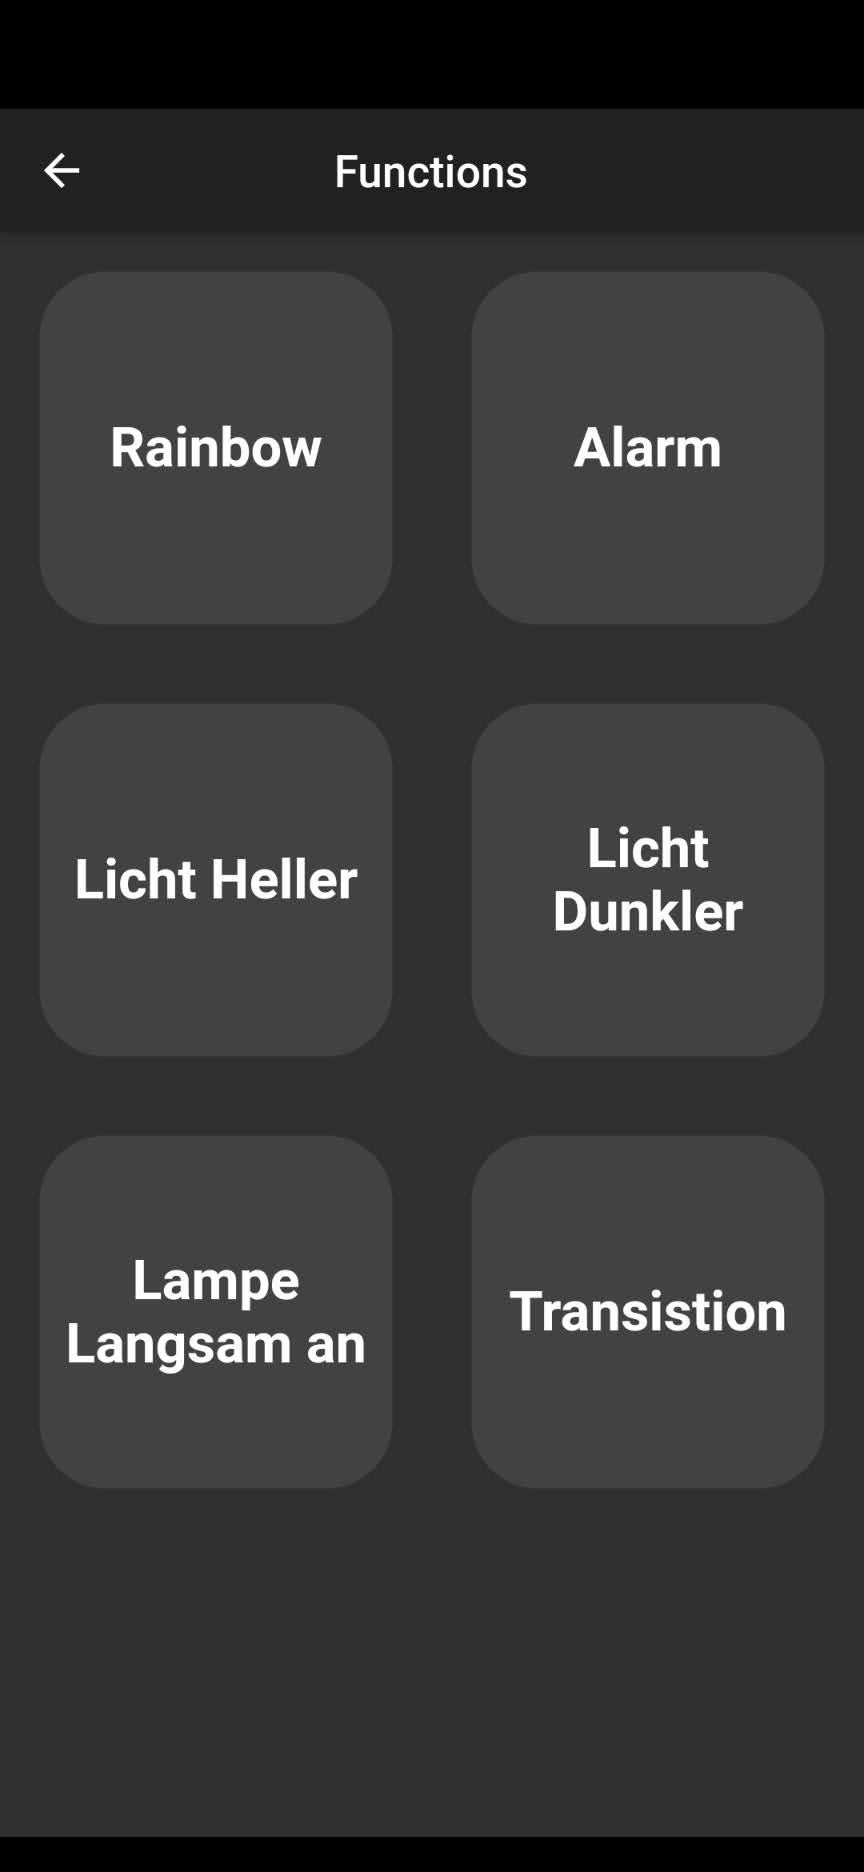 A Flutter App to Control self-built-lamps